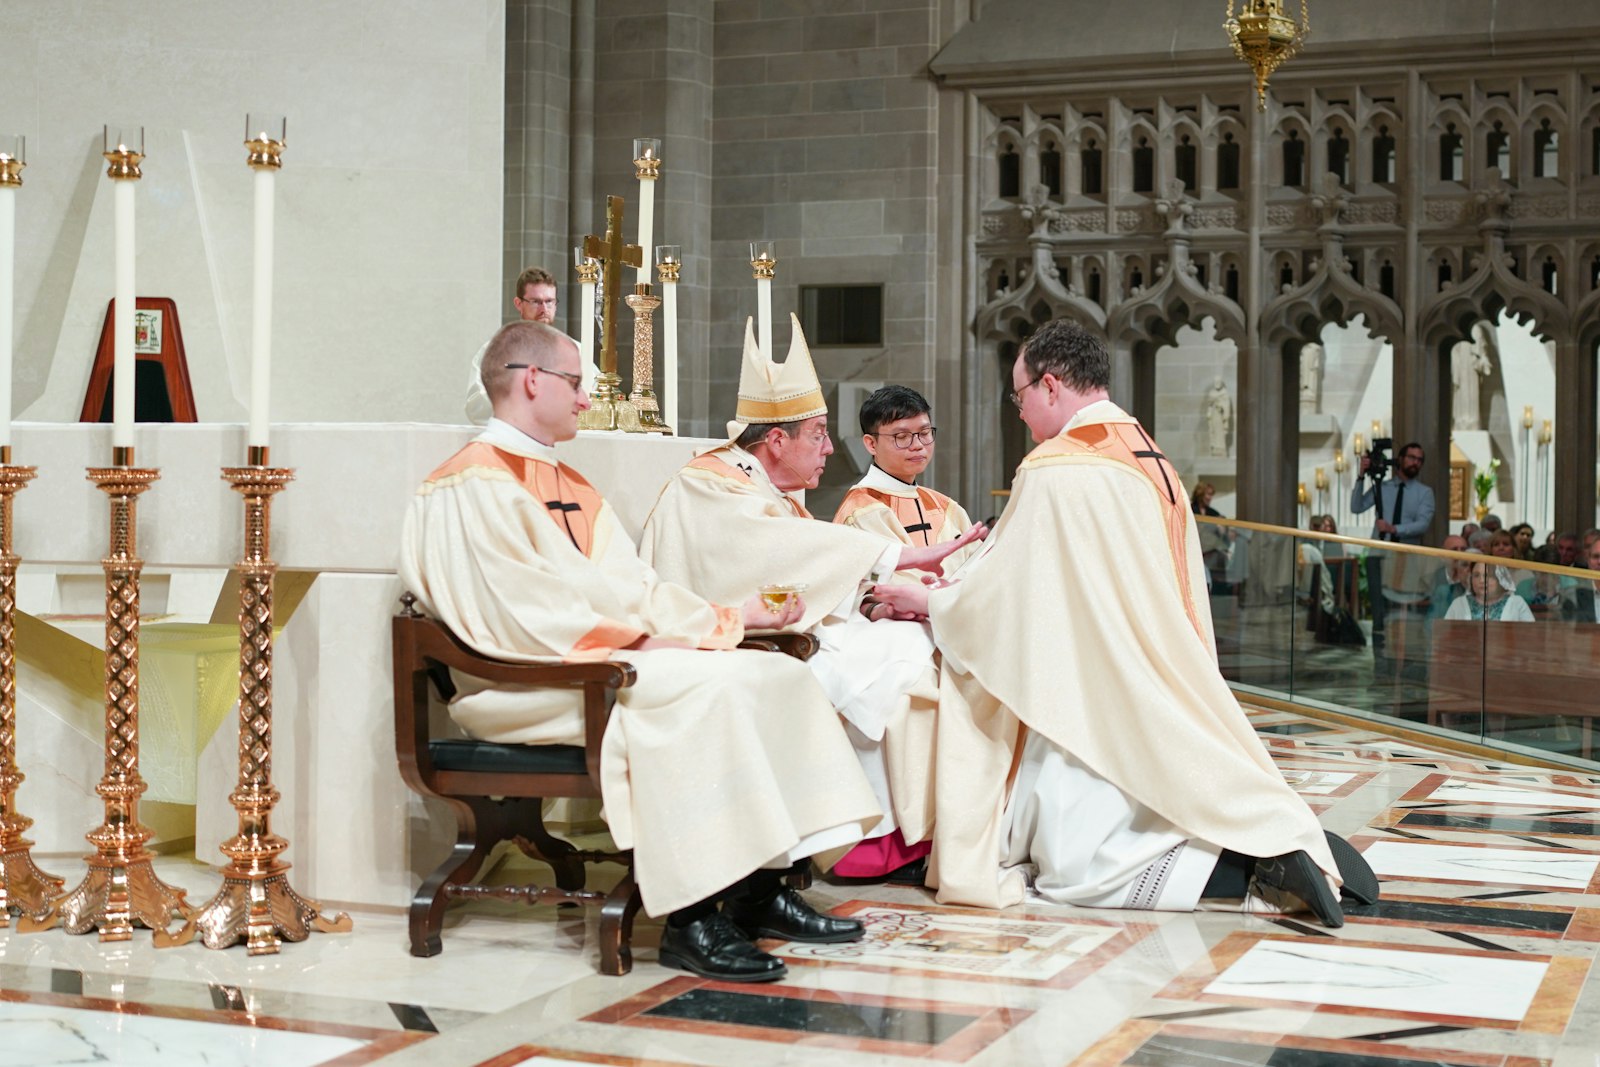 Archbishop Allen H. Vigneron anoints the hands of Fr. Richard Dorsch with Holy Chrism after ordaining Fr. Dorsch a priest.